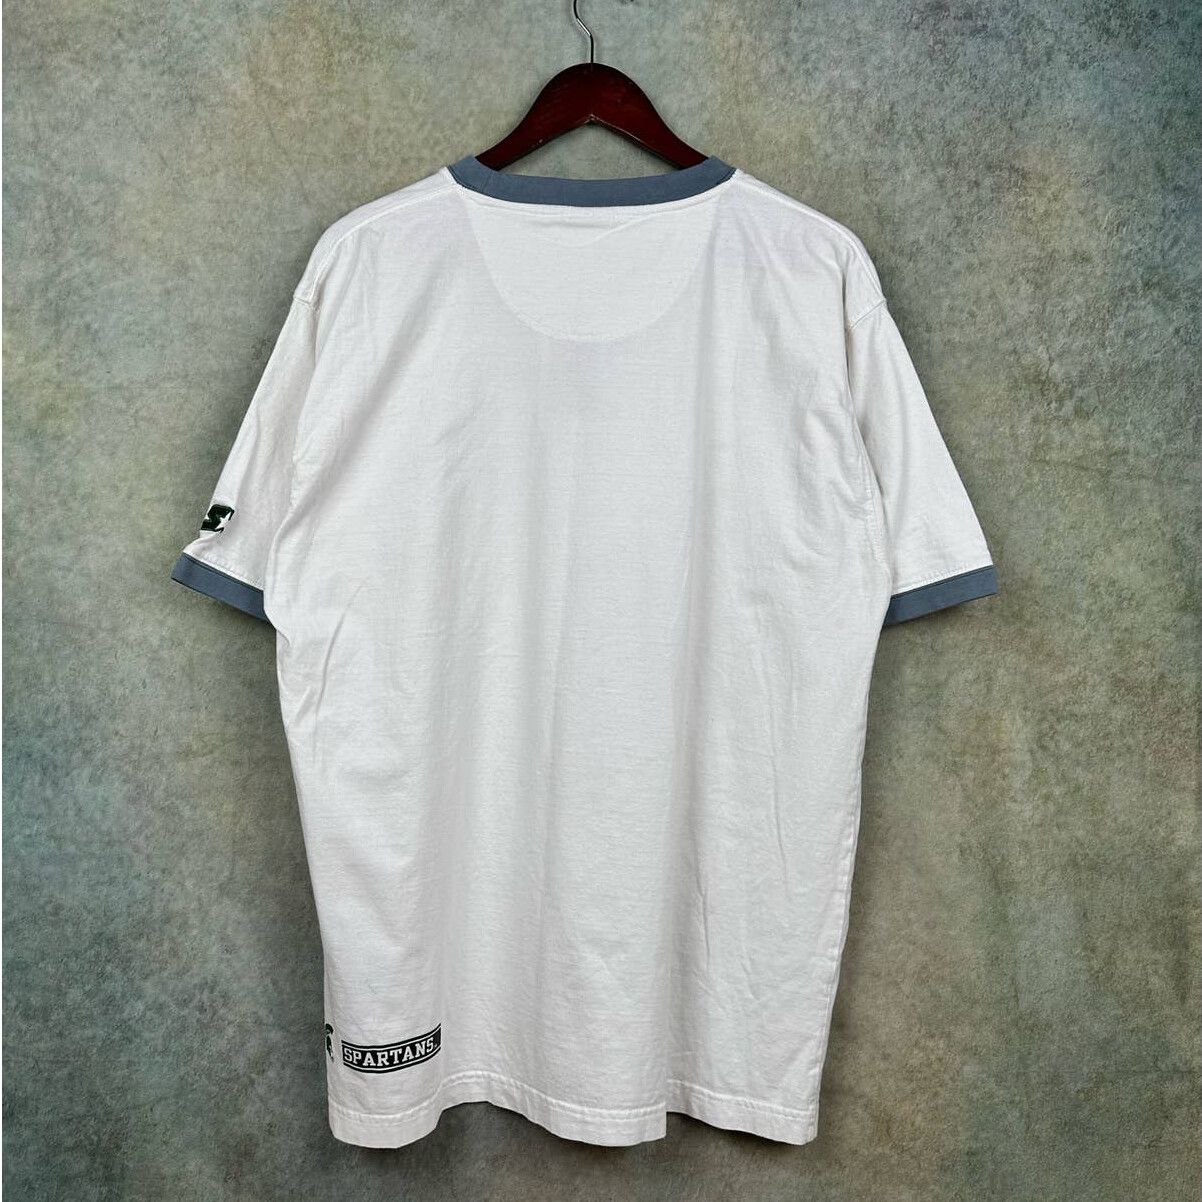 Vintage Vintage Michigan State Spartans Ringer T Shirt Sz L White Size US L / EU 52-54 / 3 - 3 Thumbnail